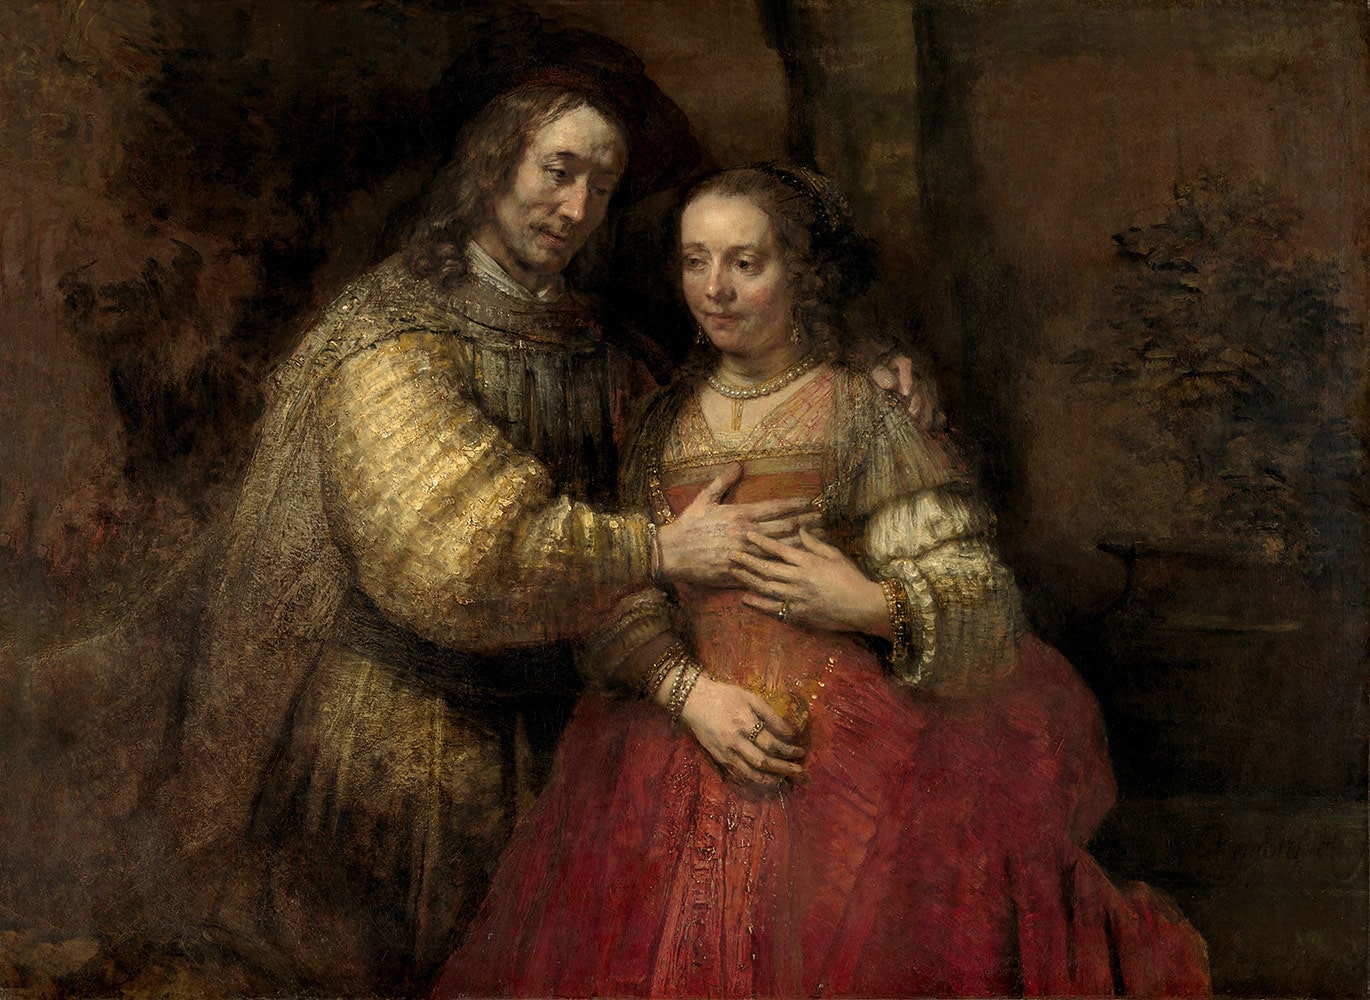 Wall Master Rhine Rembrandt of the Jewish Bride